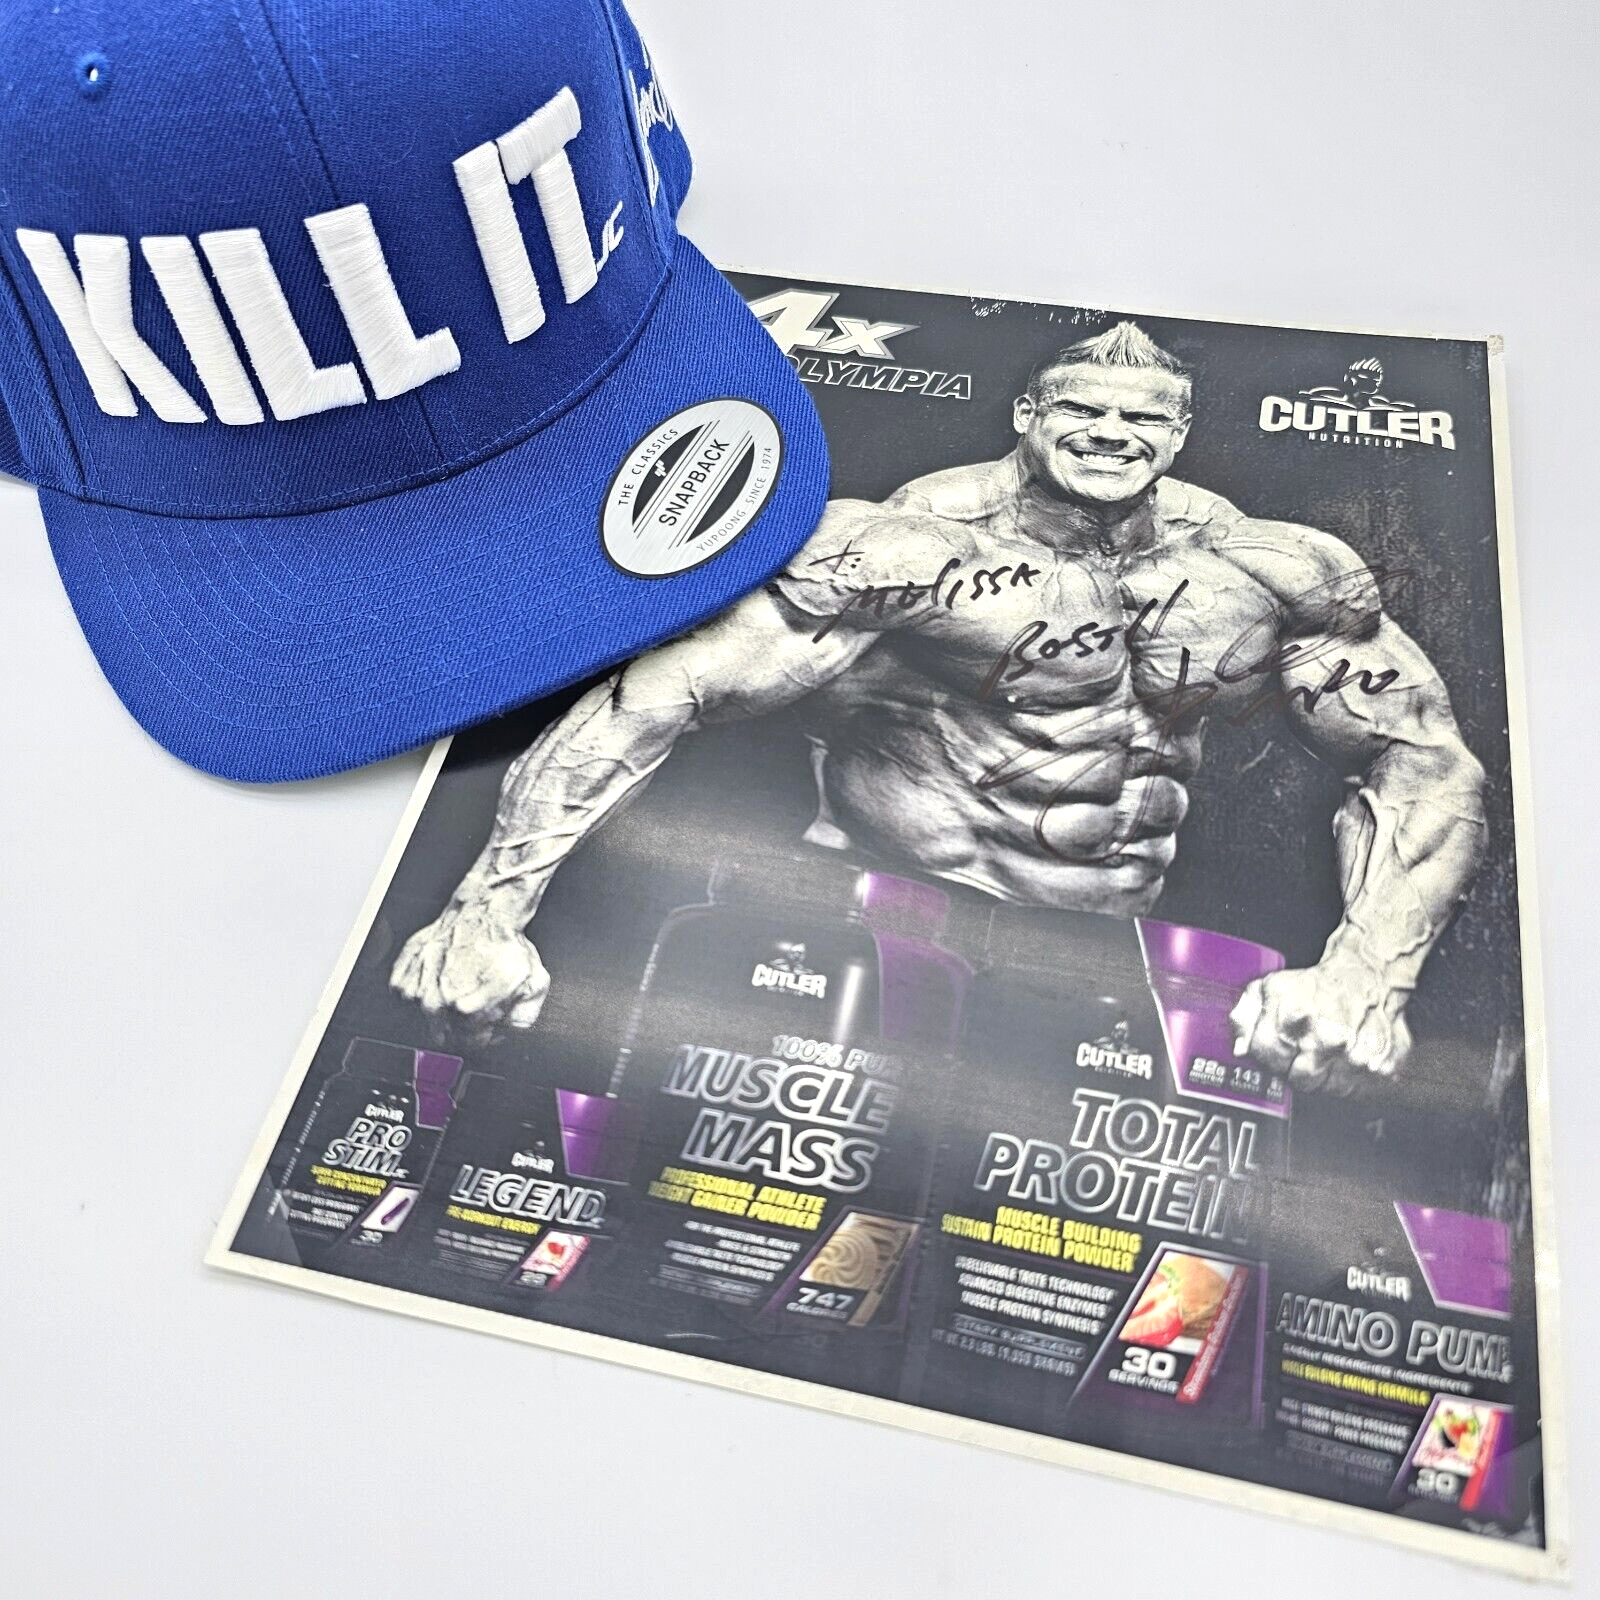 Mr. Oylmpia Jay Cutler Bodybuilder Signed Kill It Snap Back Blue Hat & Poster